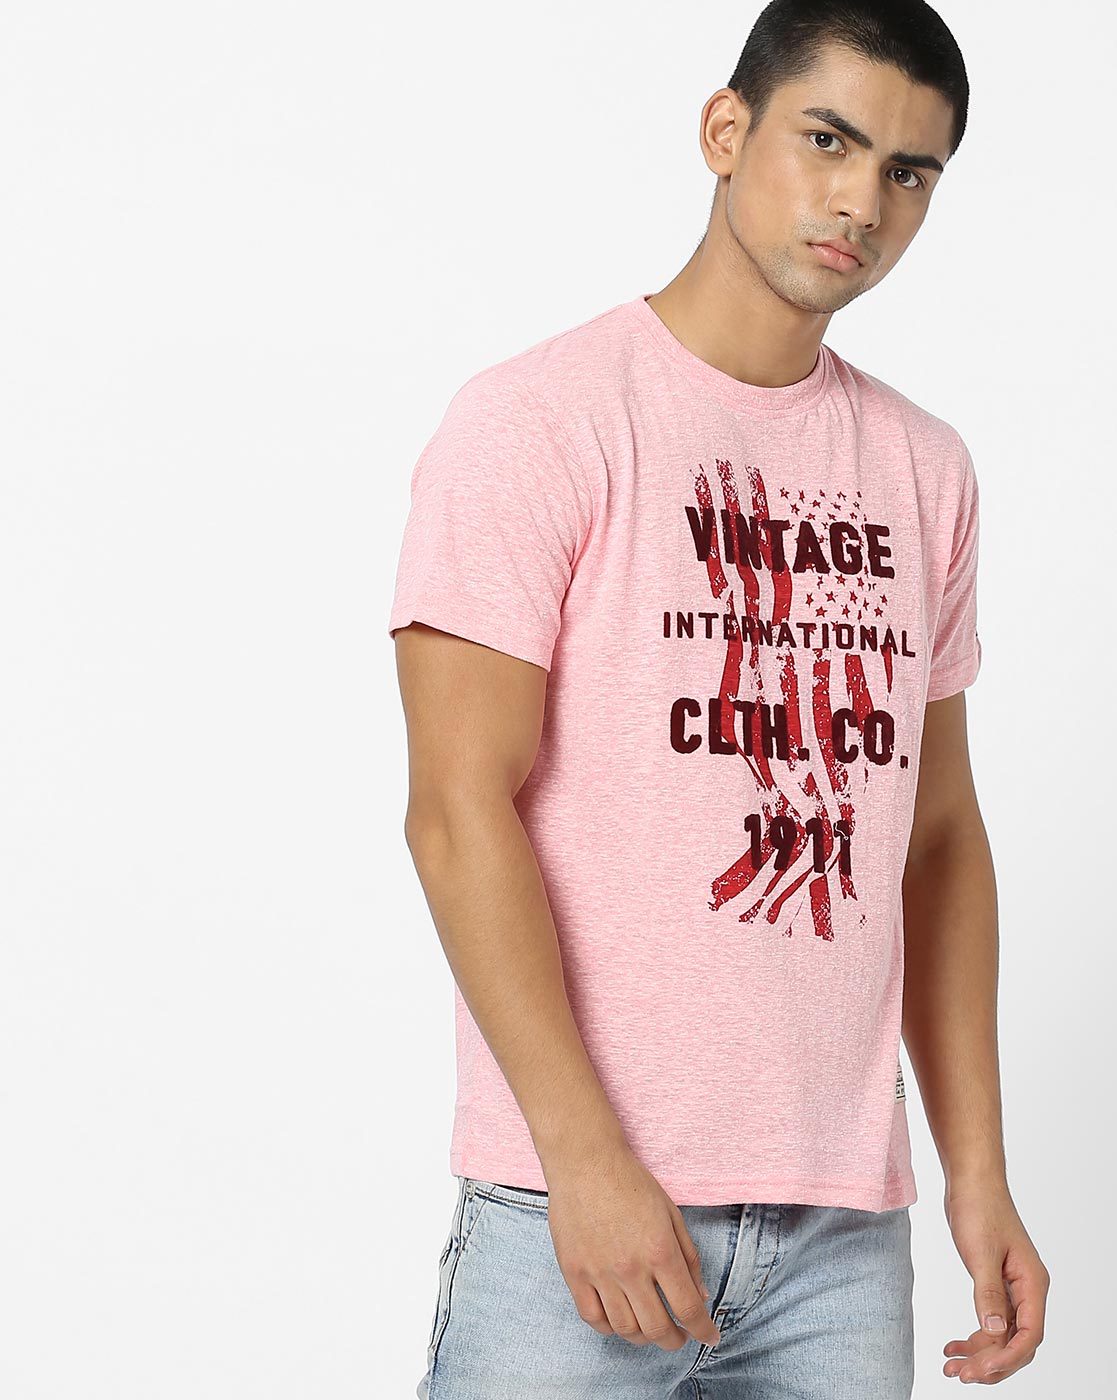 fila pink t shirt